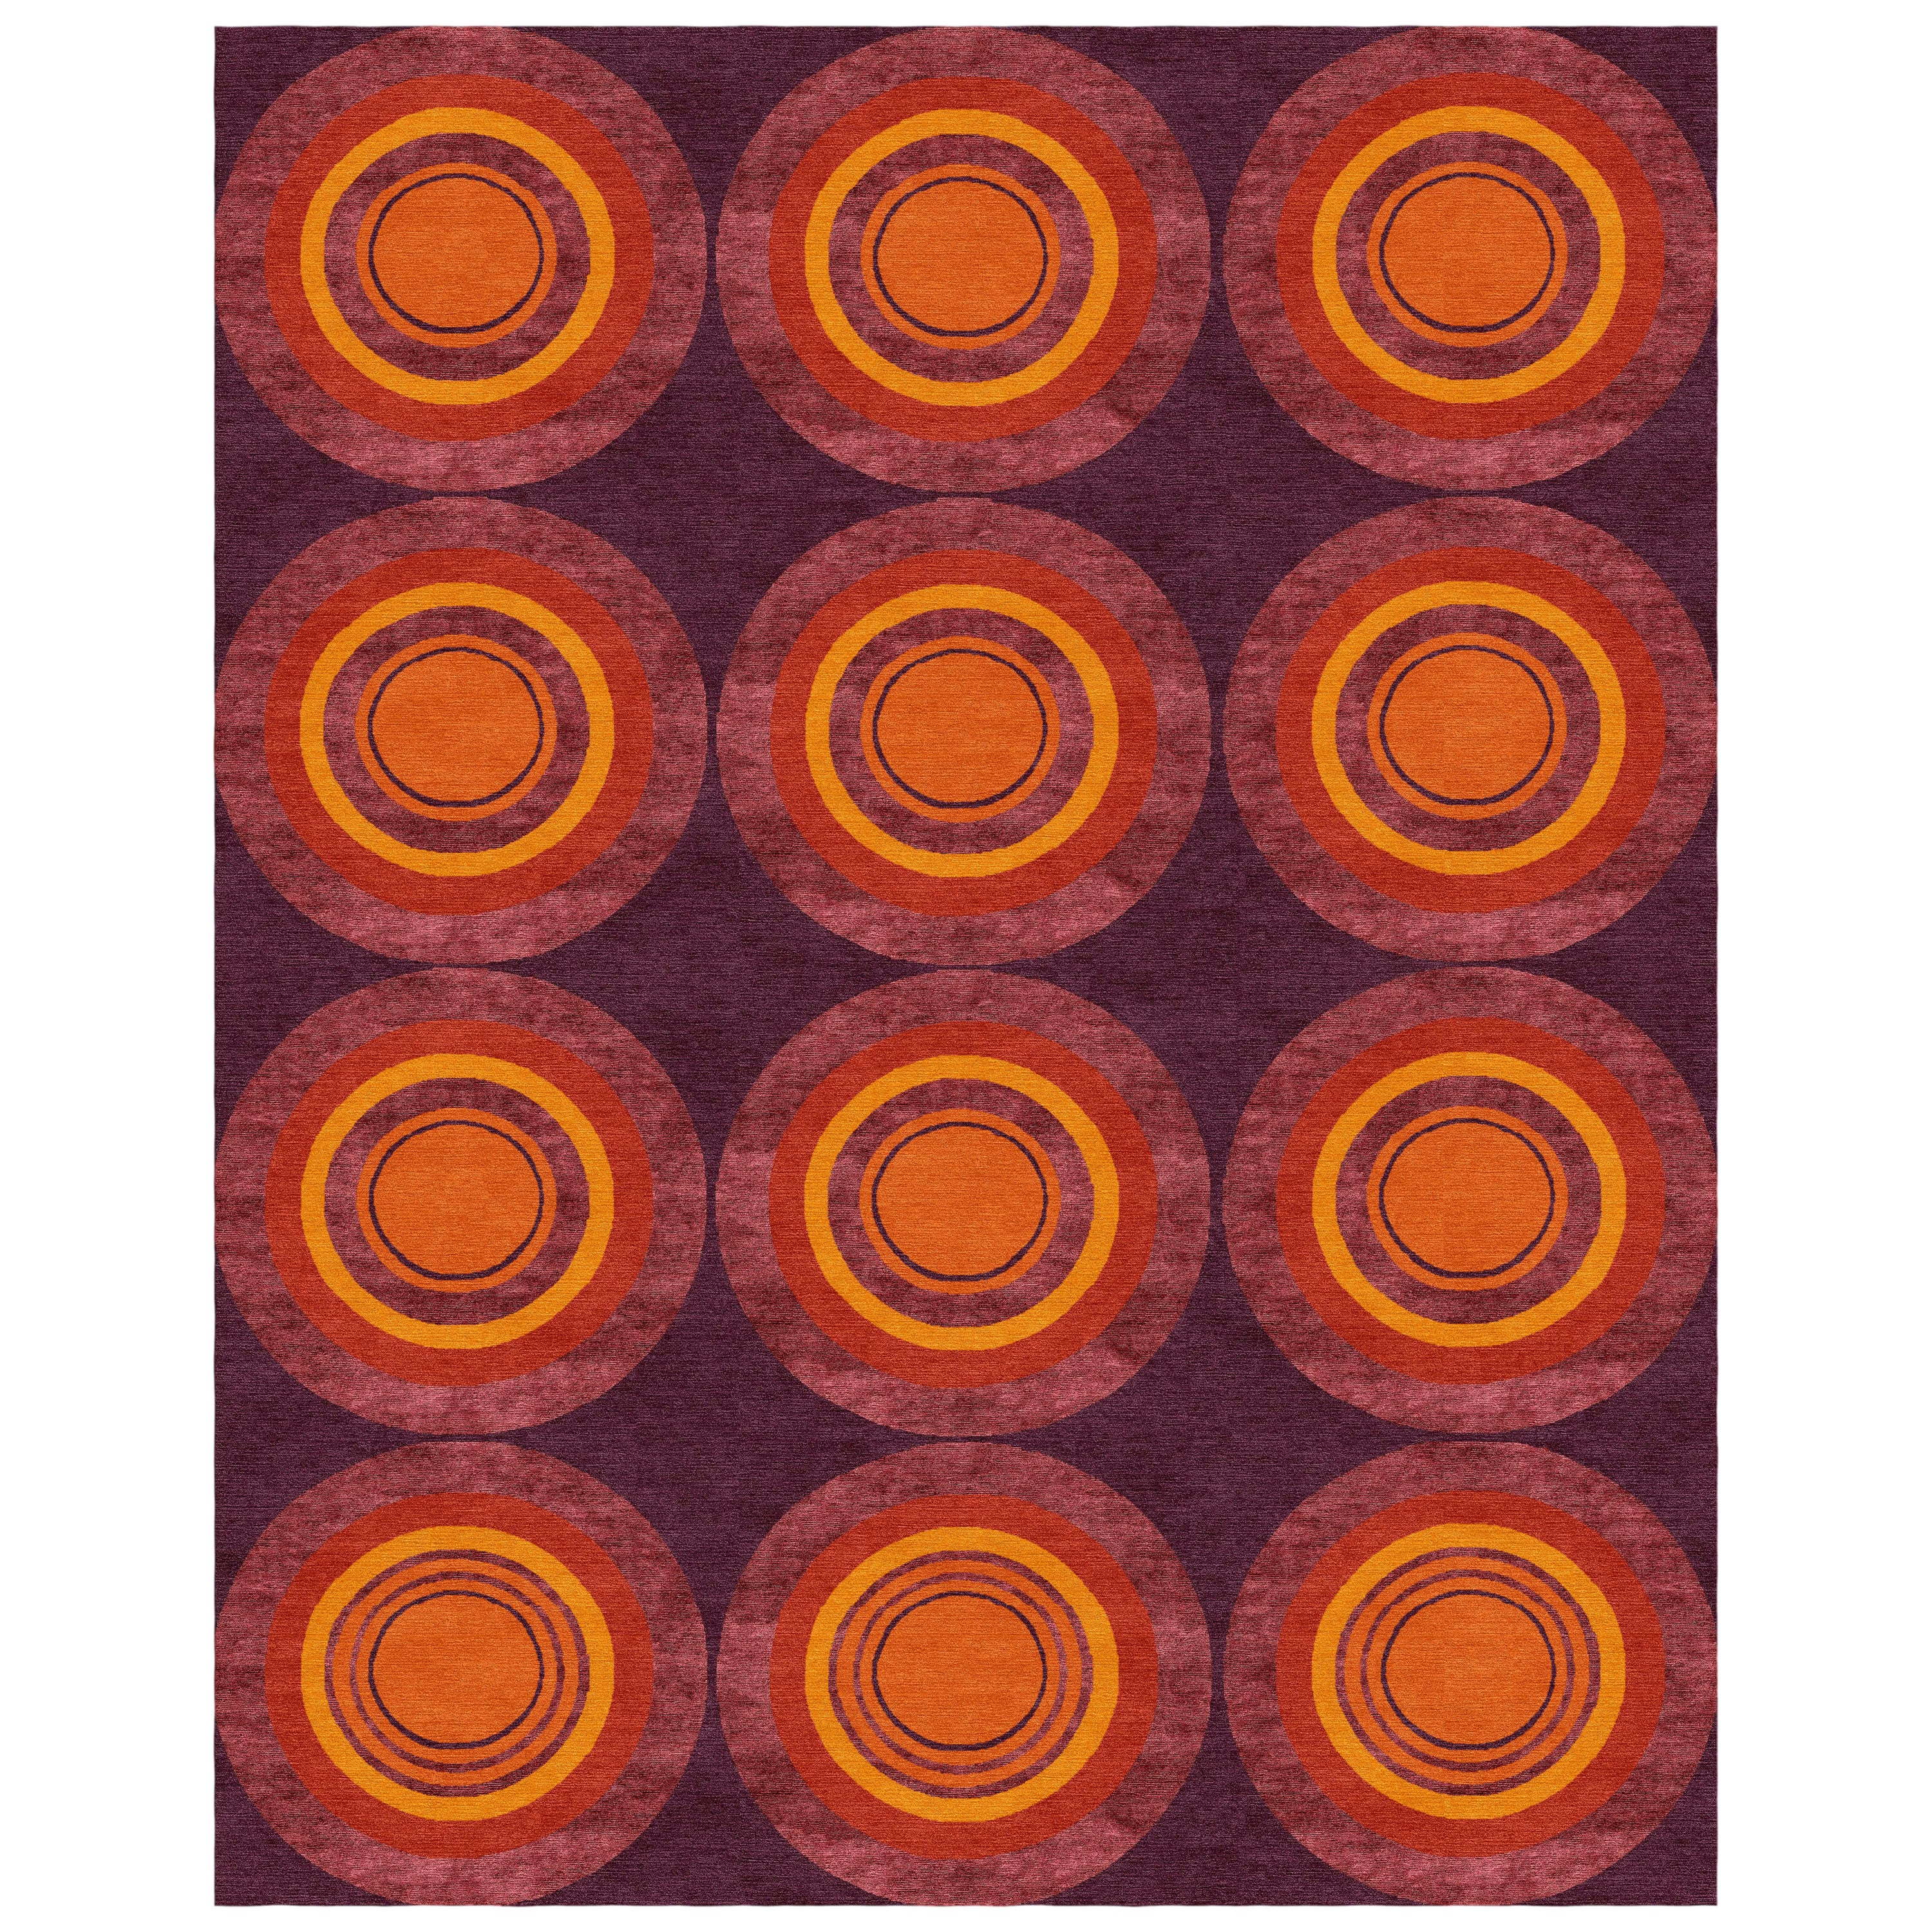 Sasha Bikoff Kollektion Moderner Teppich in Rost-orange „Goals Bonfire“ 6'X9'